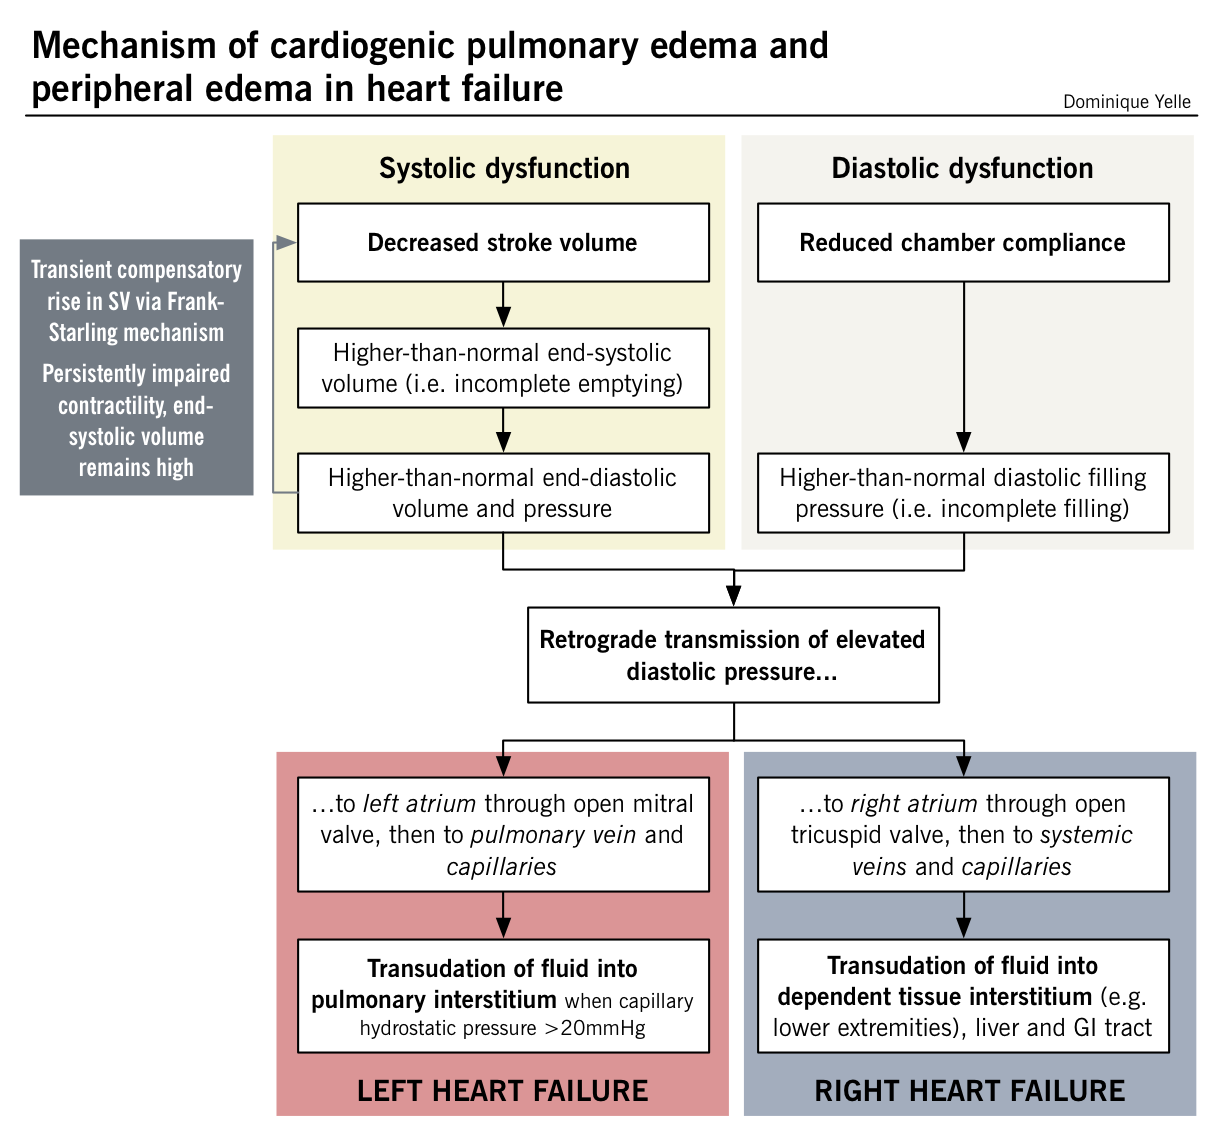 Mechanism of cardiogenic pulmonary edema and peripheral edema in heart failure